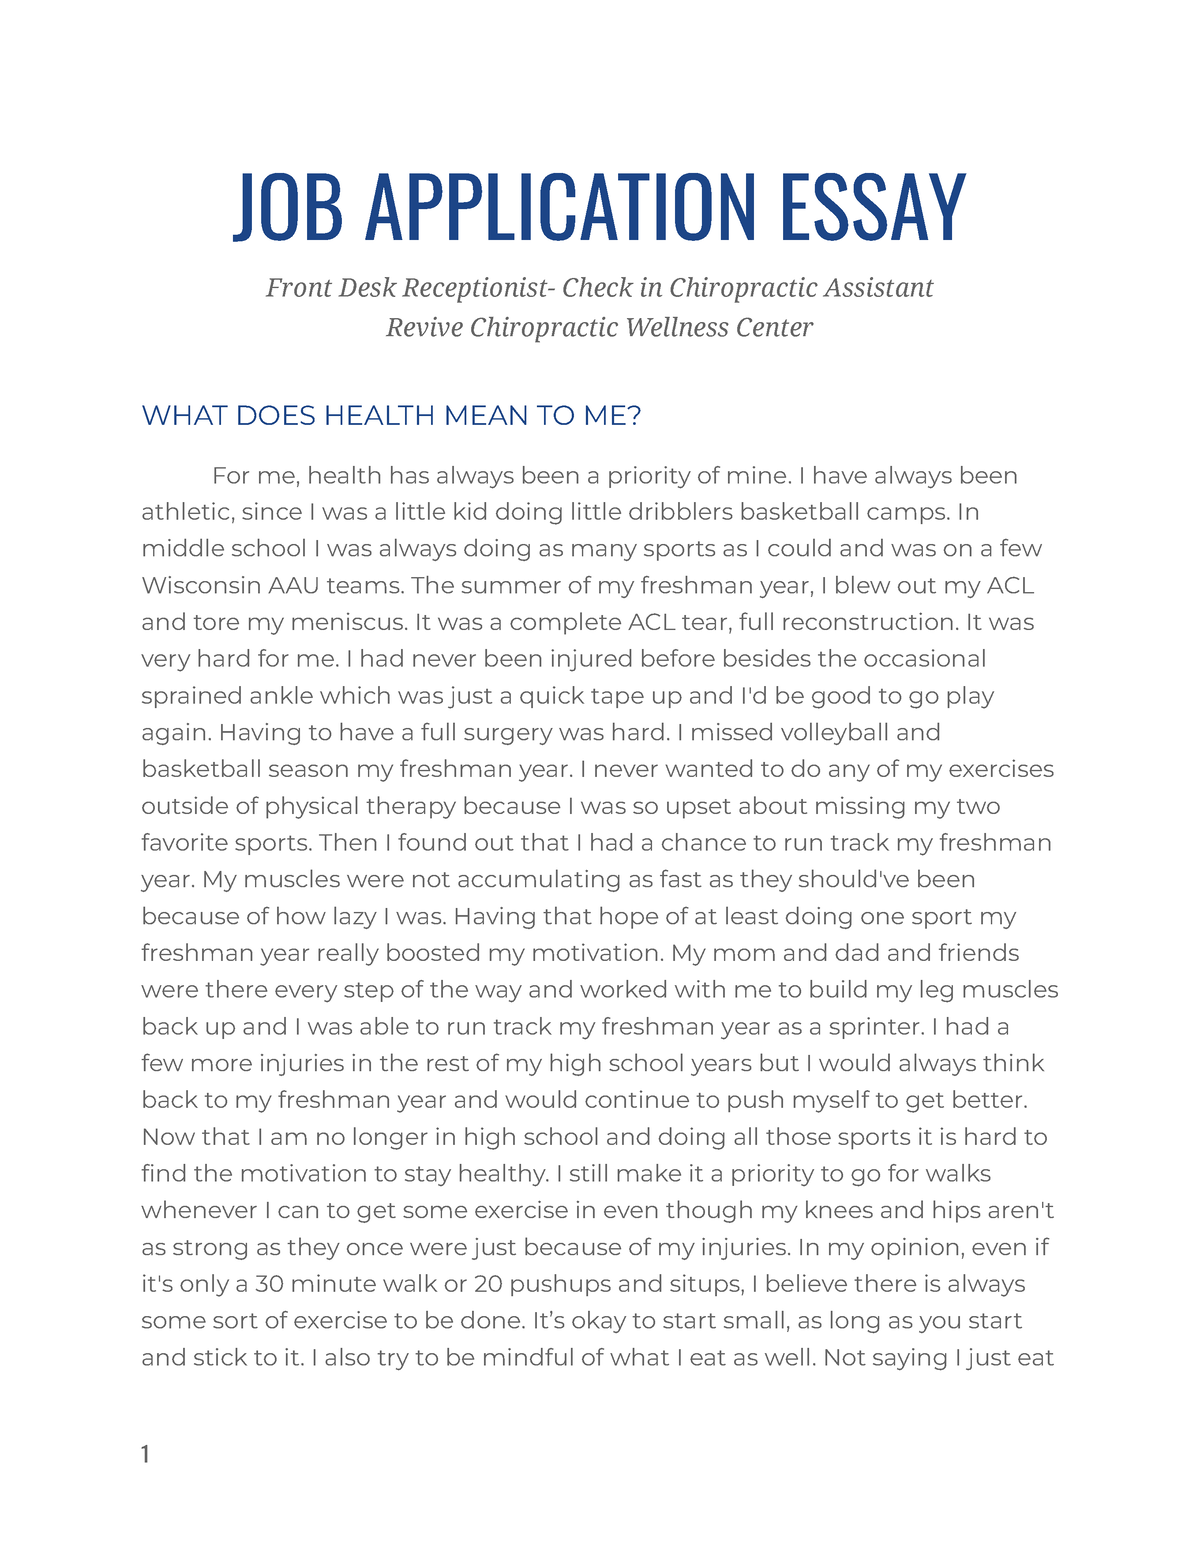 essay about job seeking